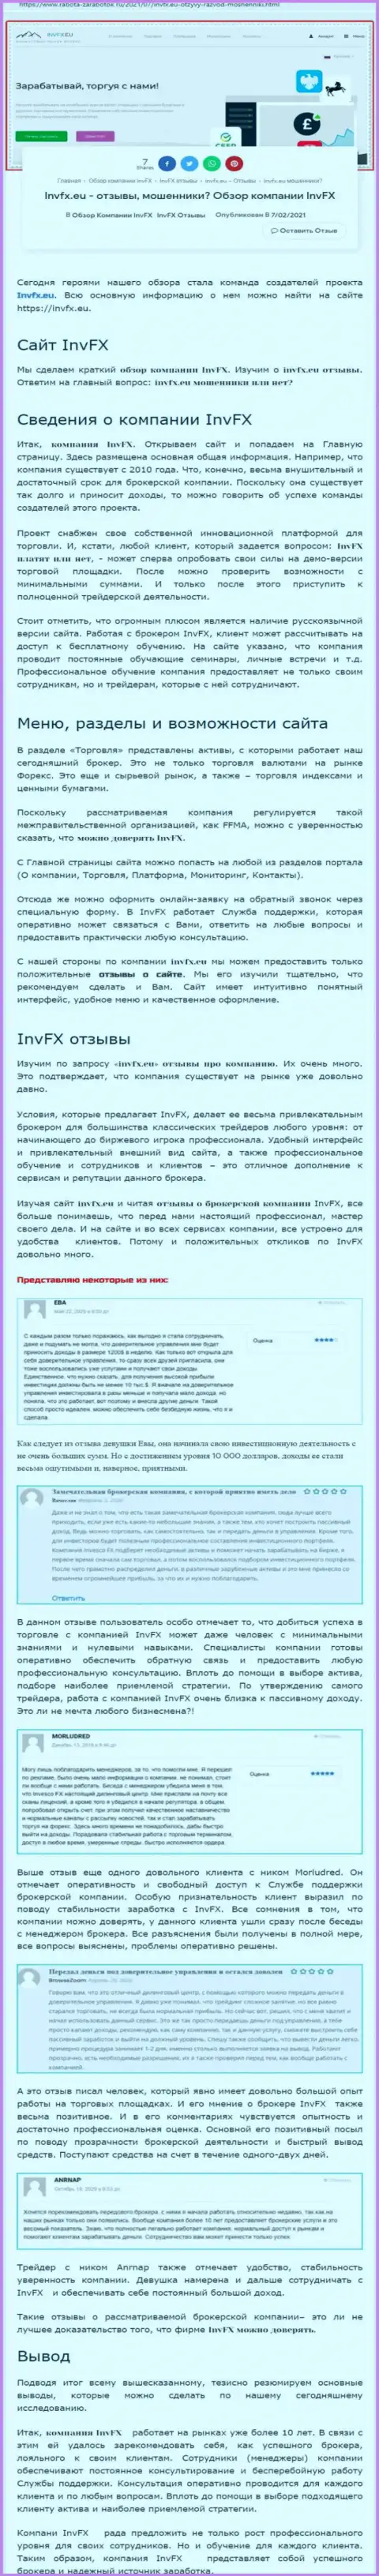 Материал онлайн-ресурса rabota-zarabotok ru о ФОРЕКС брокере Инвеско Лтд